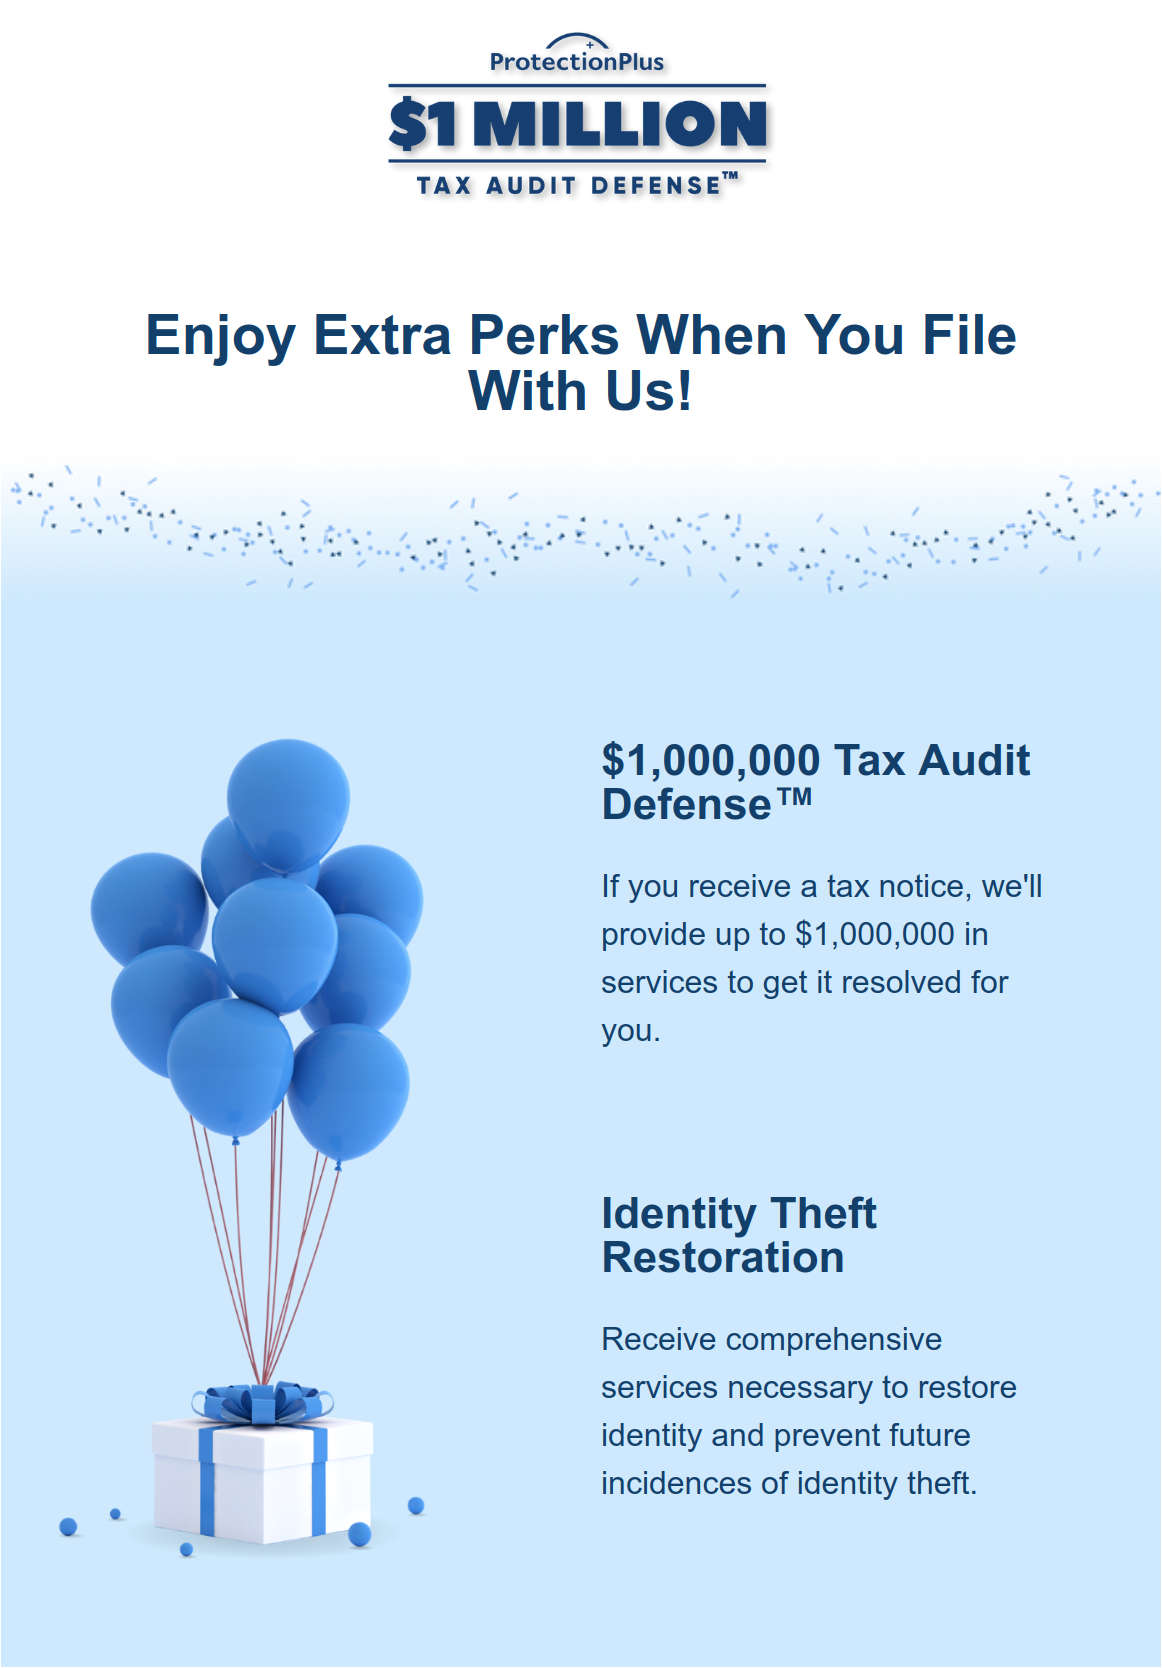 ProtectionPlus Audit Defense flyer